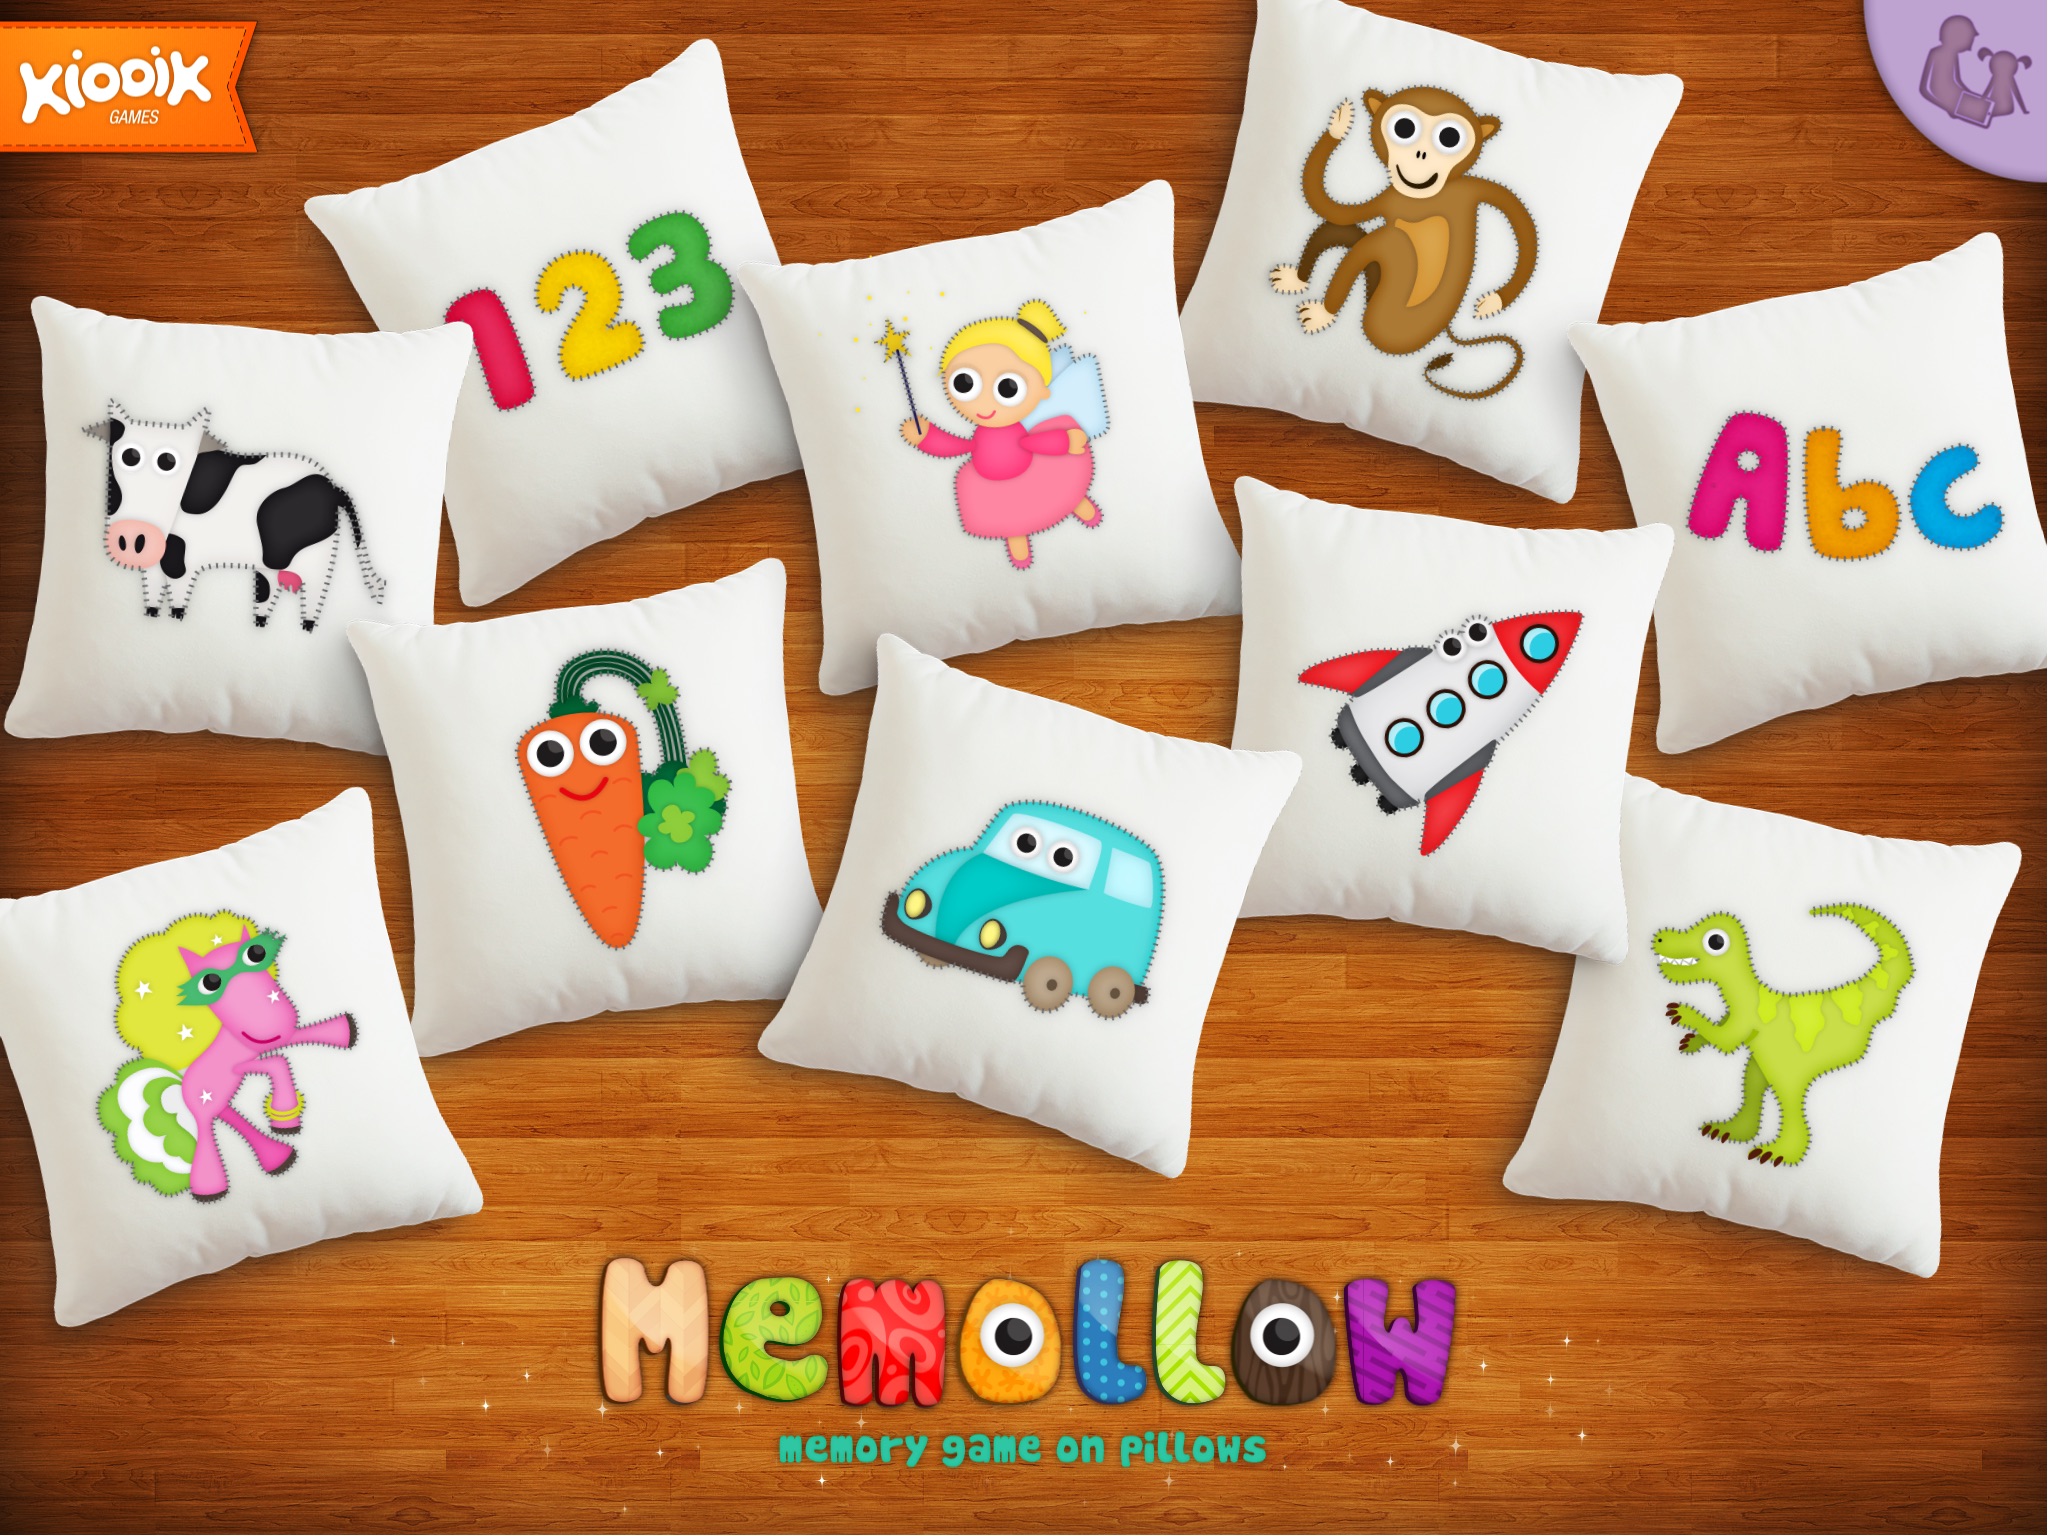 Memollow - Memory Game on Pillows for Kids screenshot 2